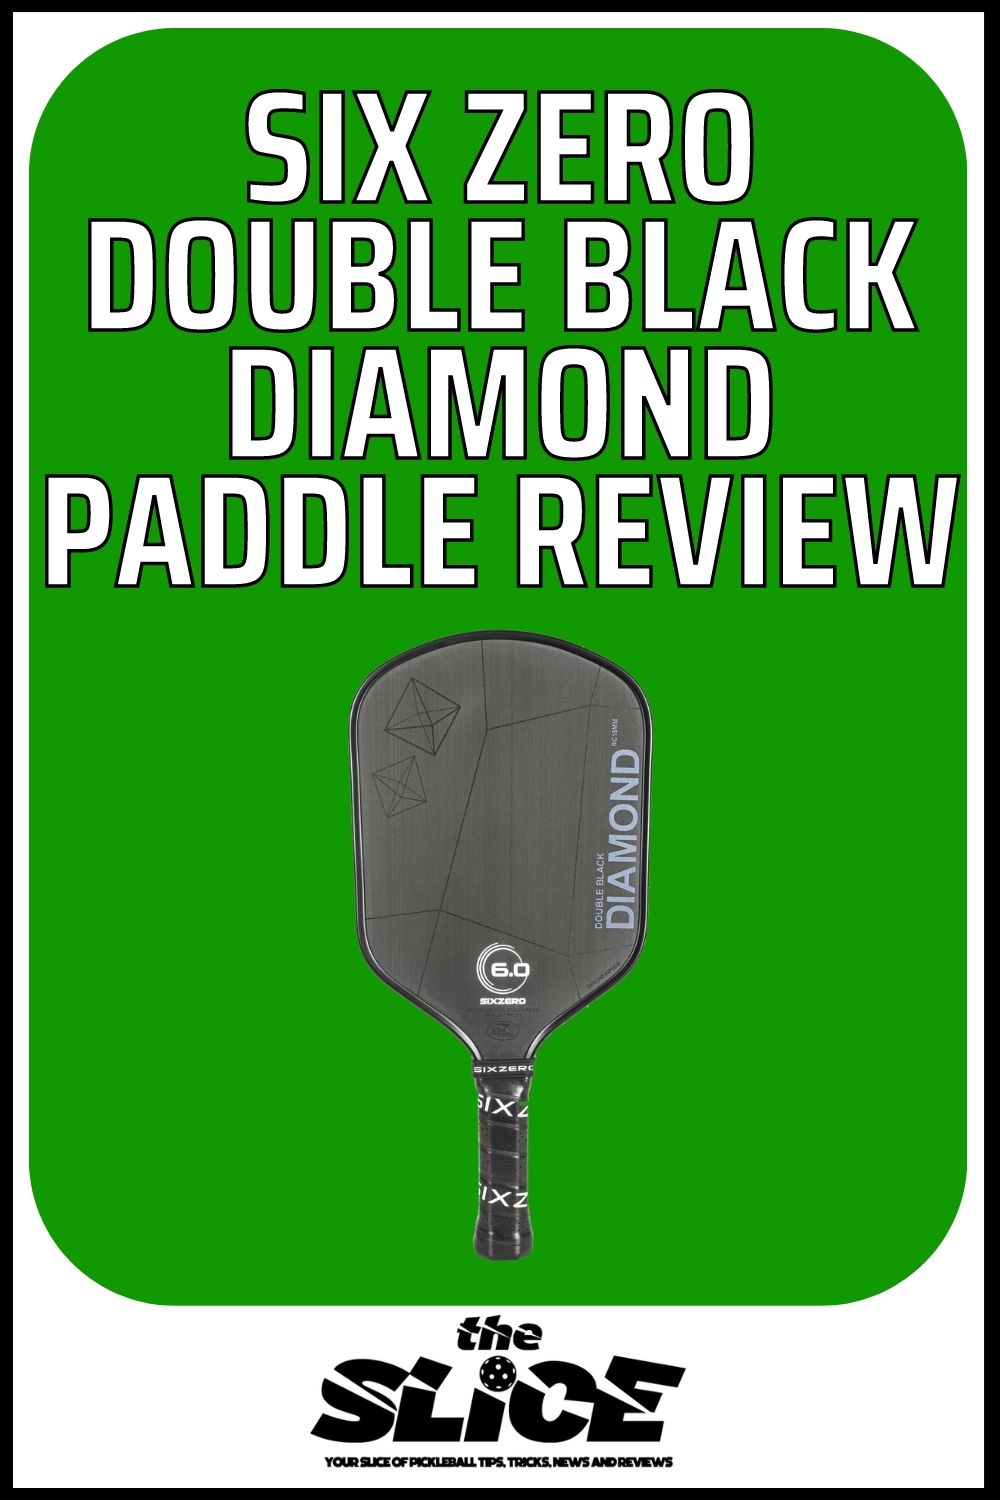 Double Black Diamond Paddle Review